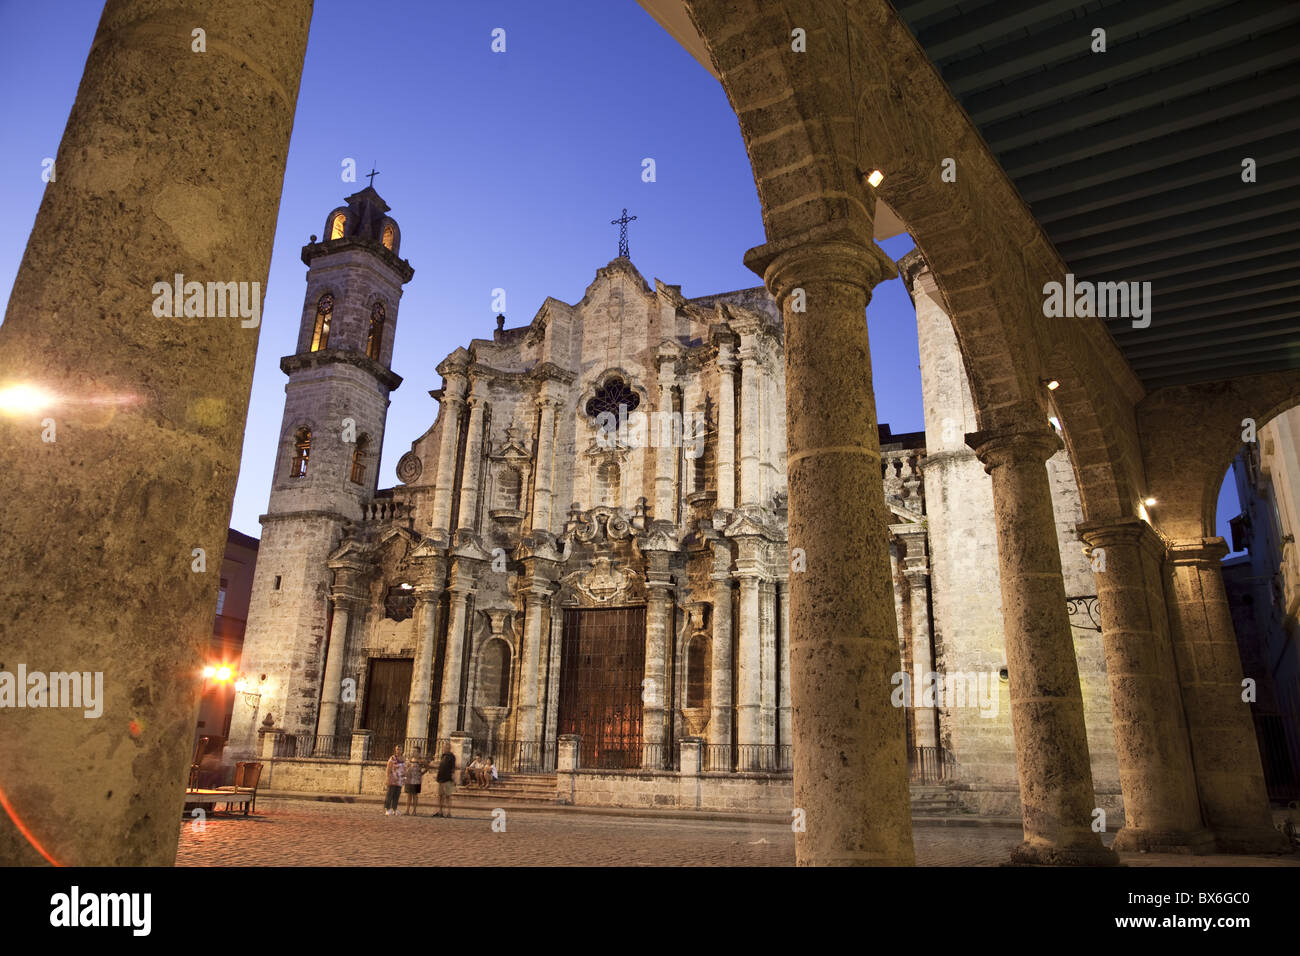 Cathedral de San Cristobal, dating from 1748, in the Plaza de la Catedral, Old Havana, UNESCO World Heritage Site, Havana, Cuba Stock Photo